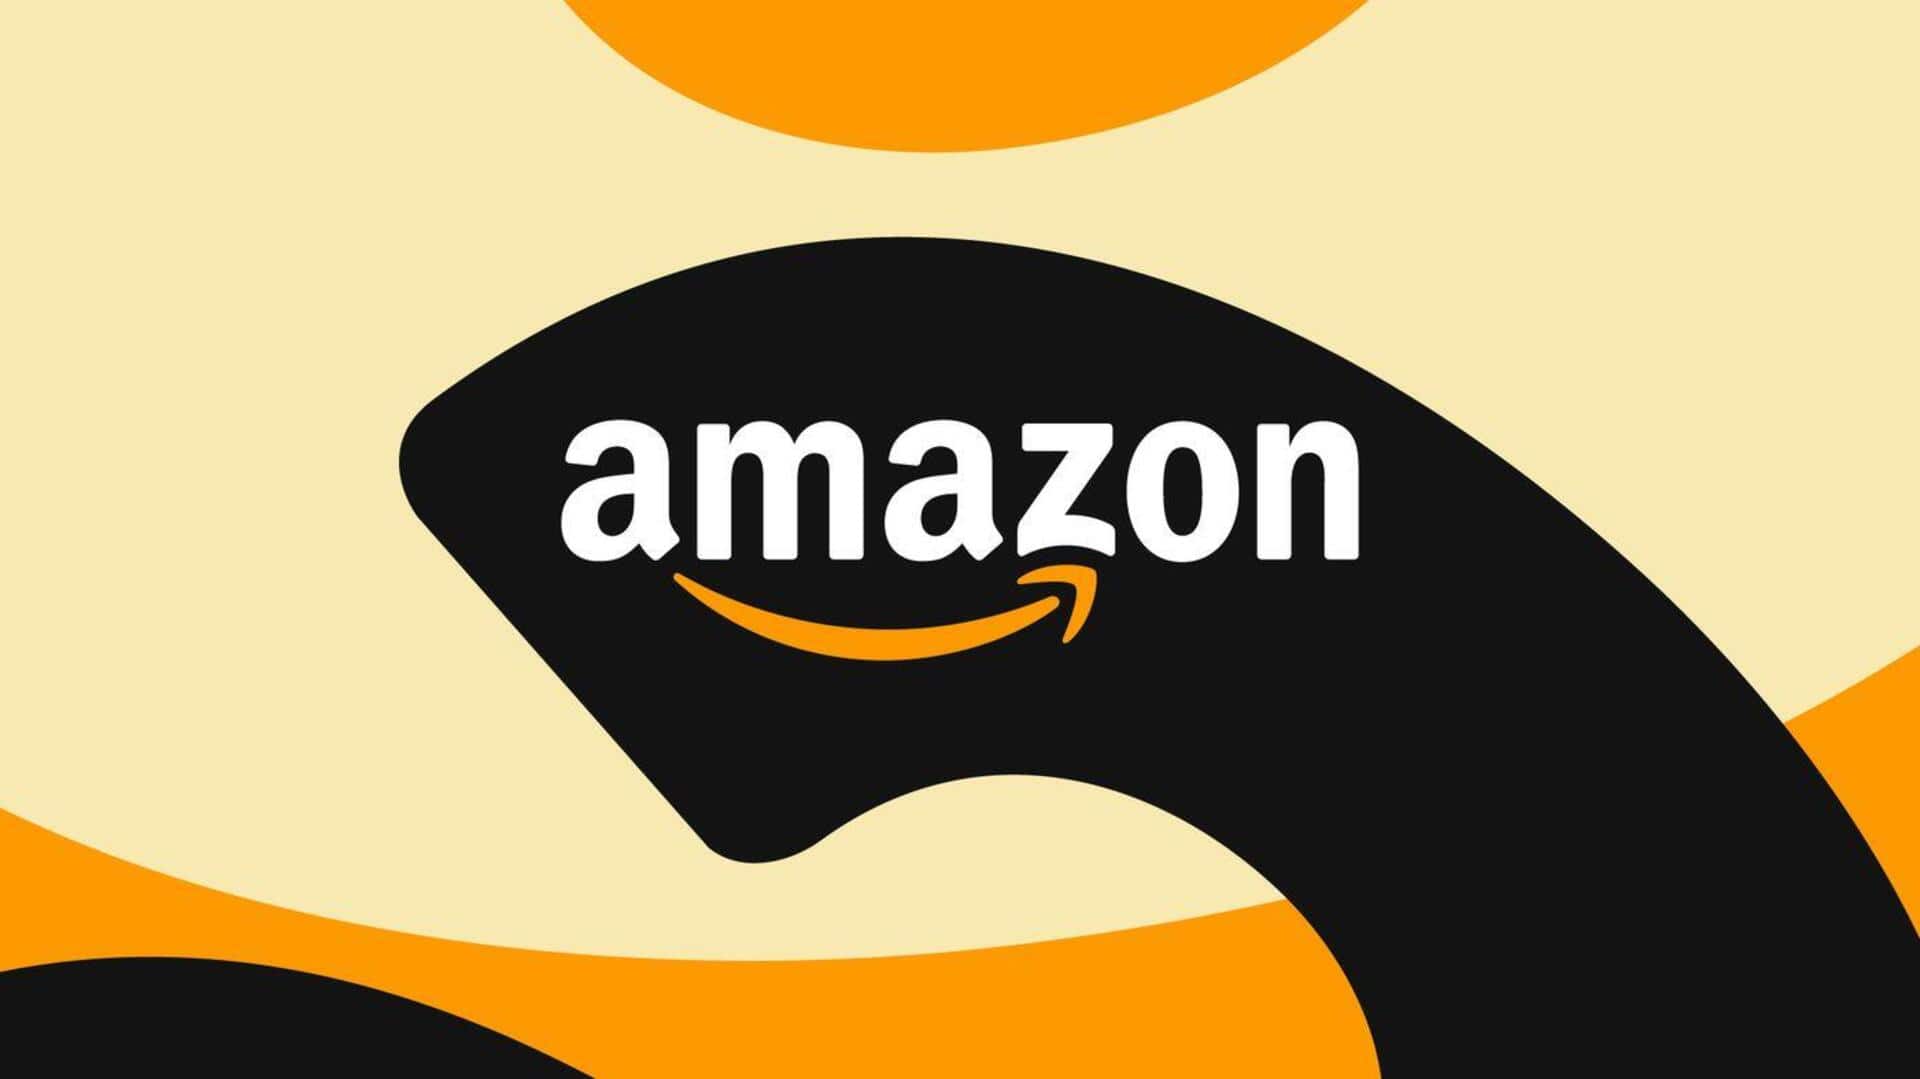 Amazon reports $143.3B revenue in Q1, beats market expectations